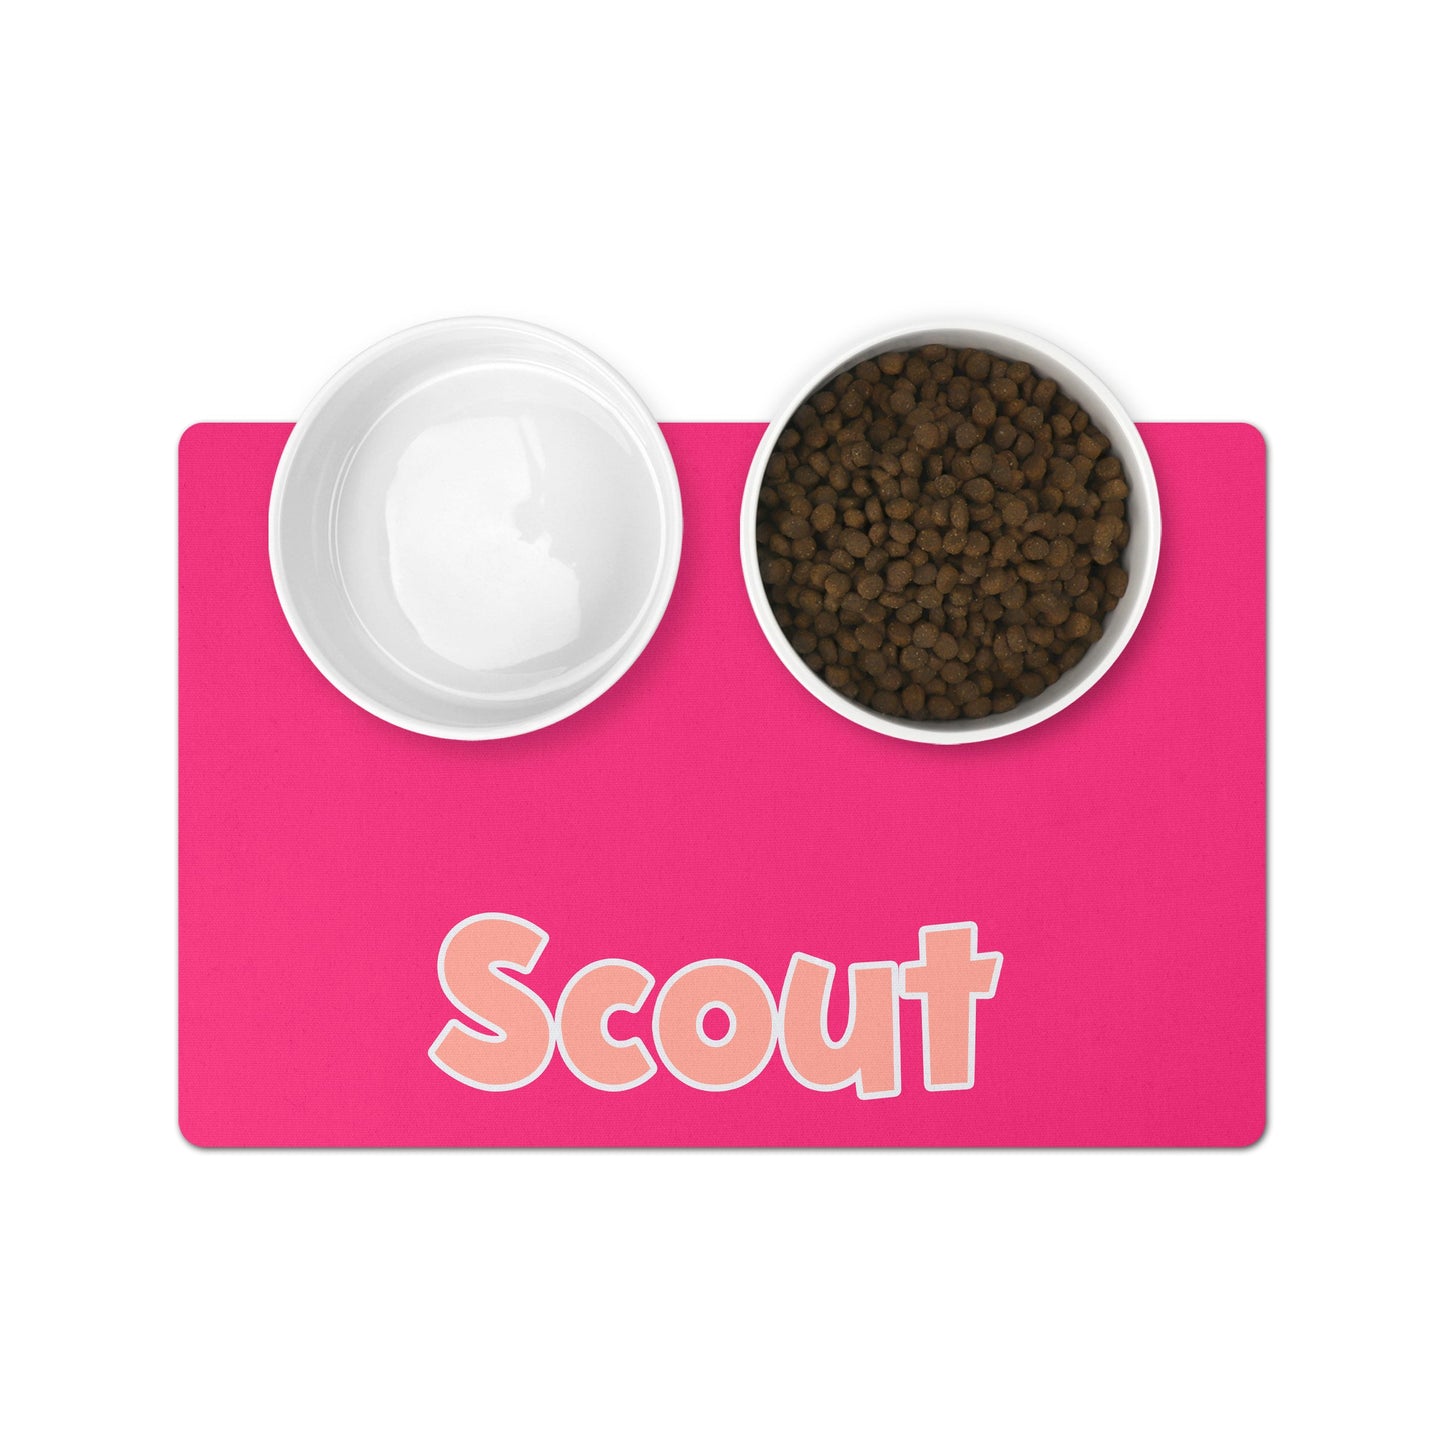 Personalized Pet Bowl Mats - Colorblack Hot Pink